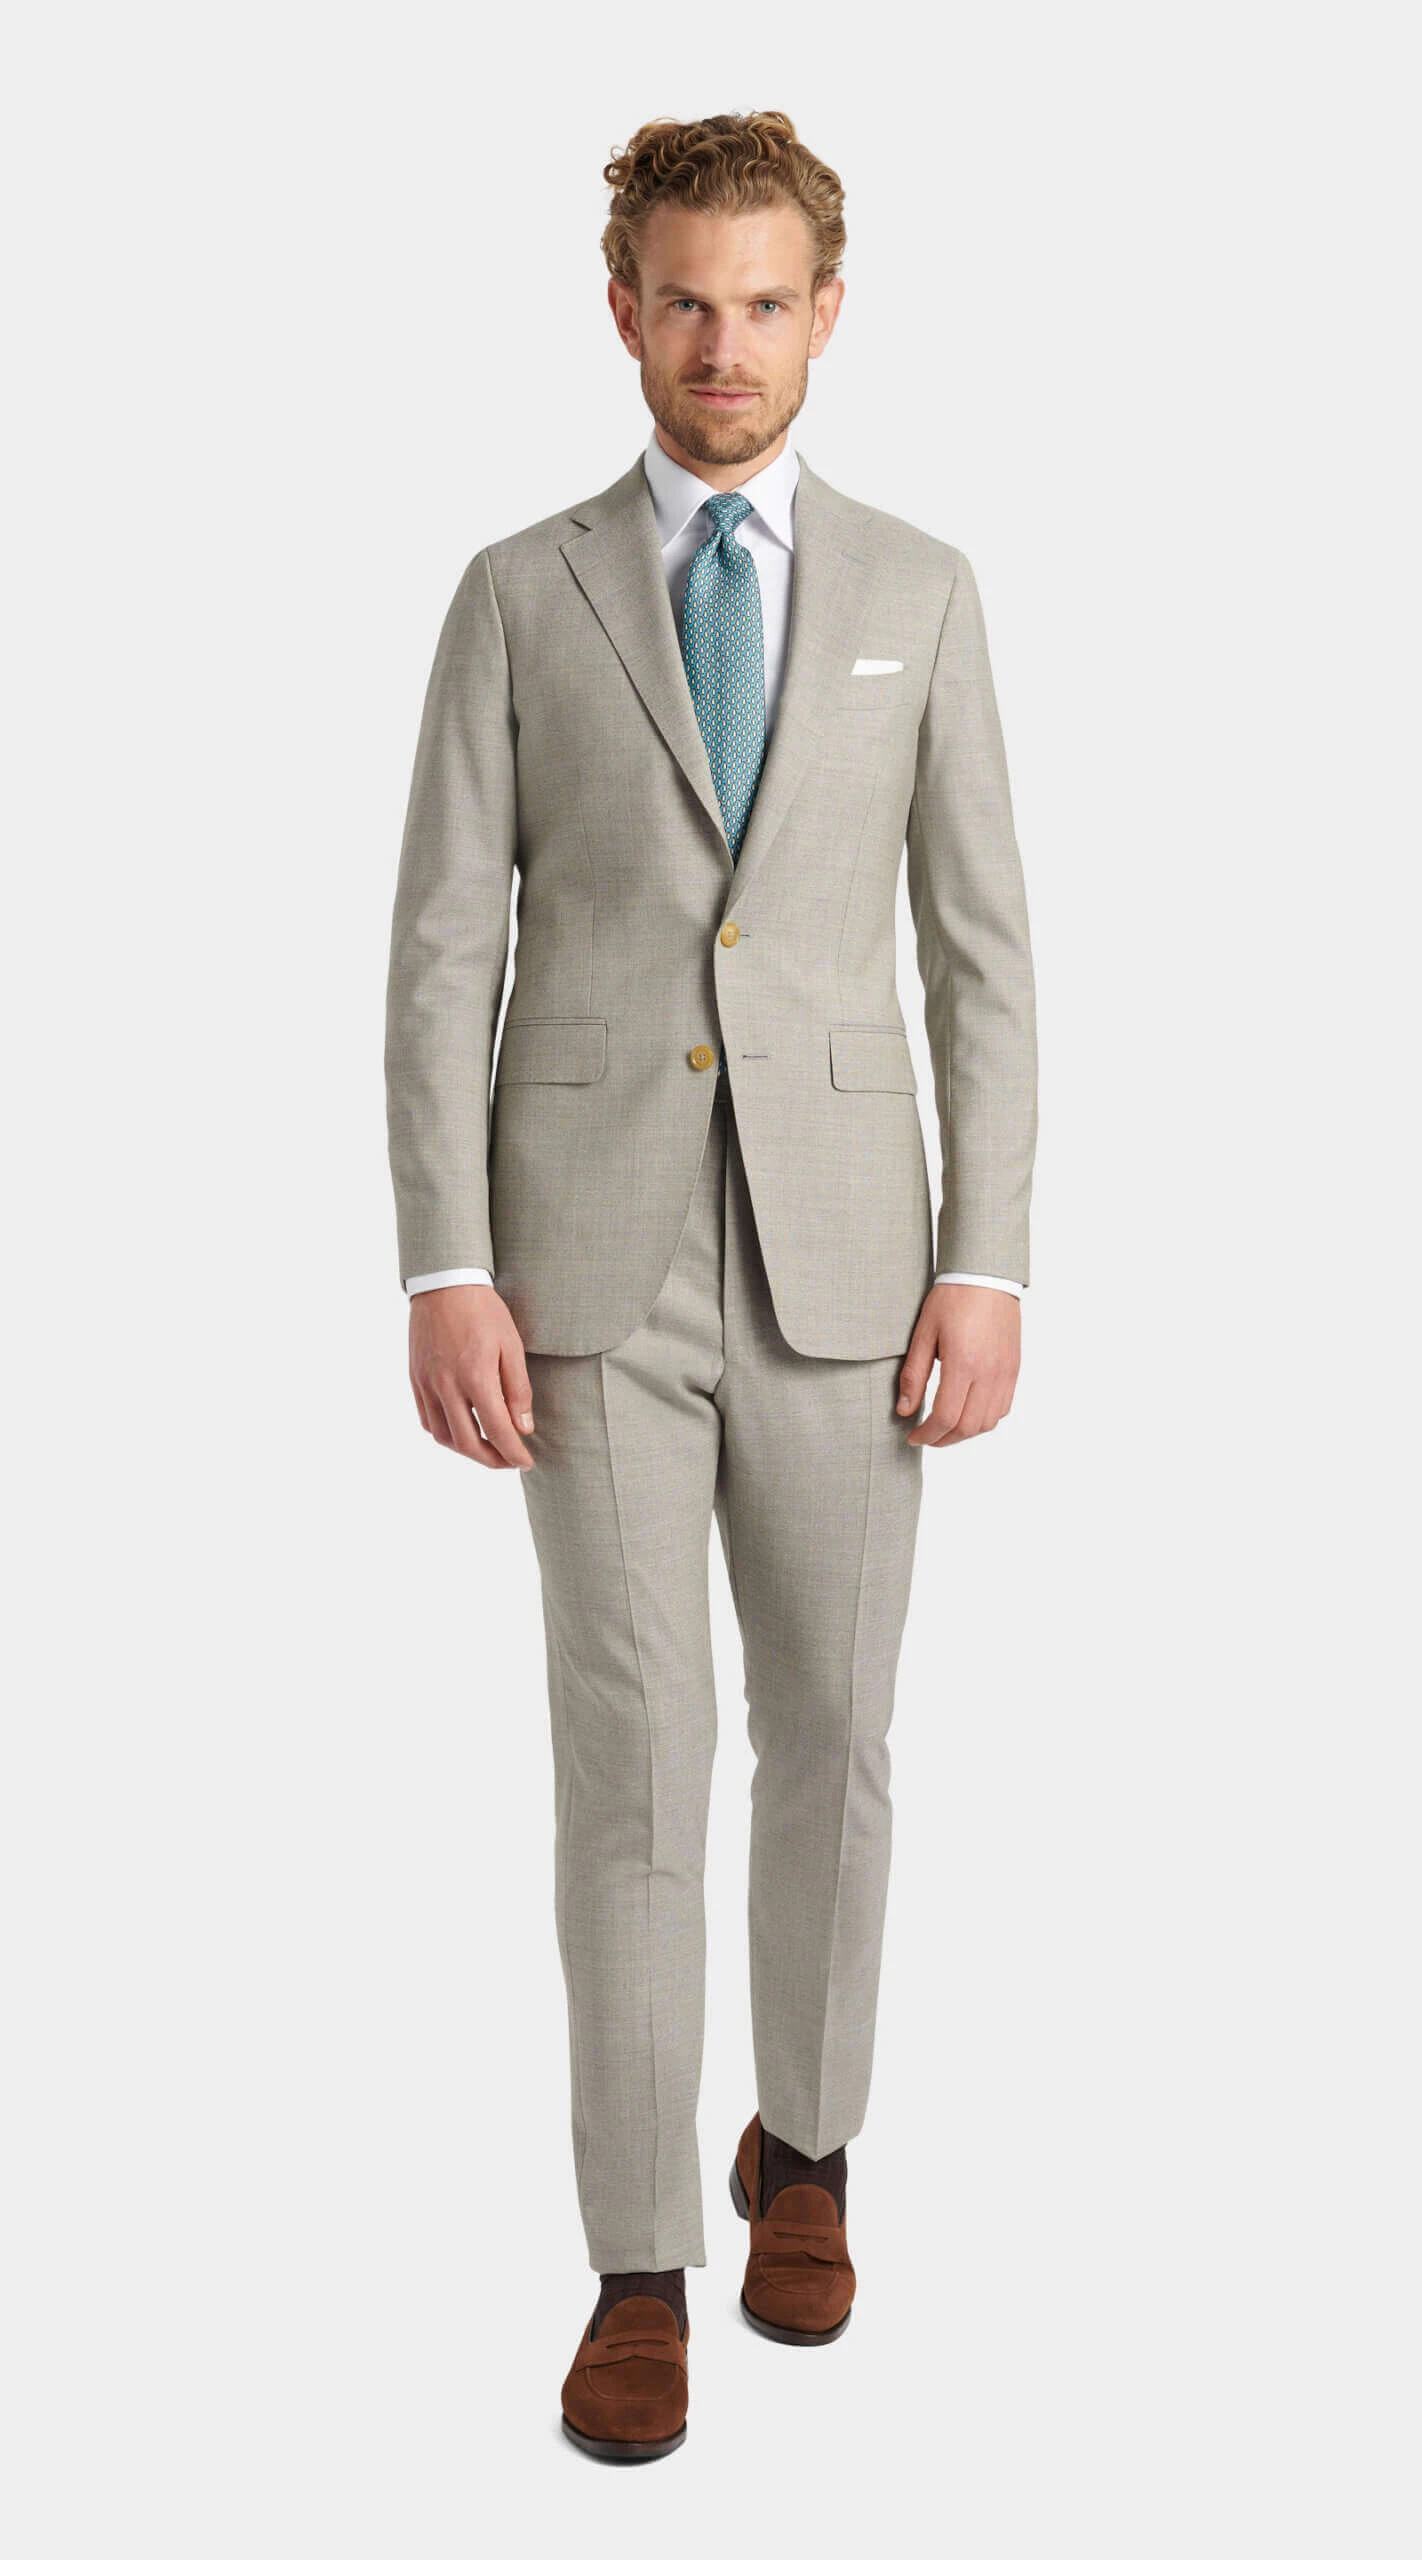 Sand colored suit / Sandfarvet jakkesæt / Sandfarbener Anzug / Sandfarget dress / beige